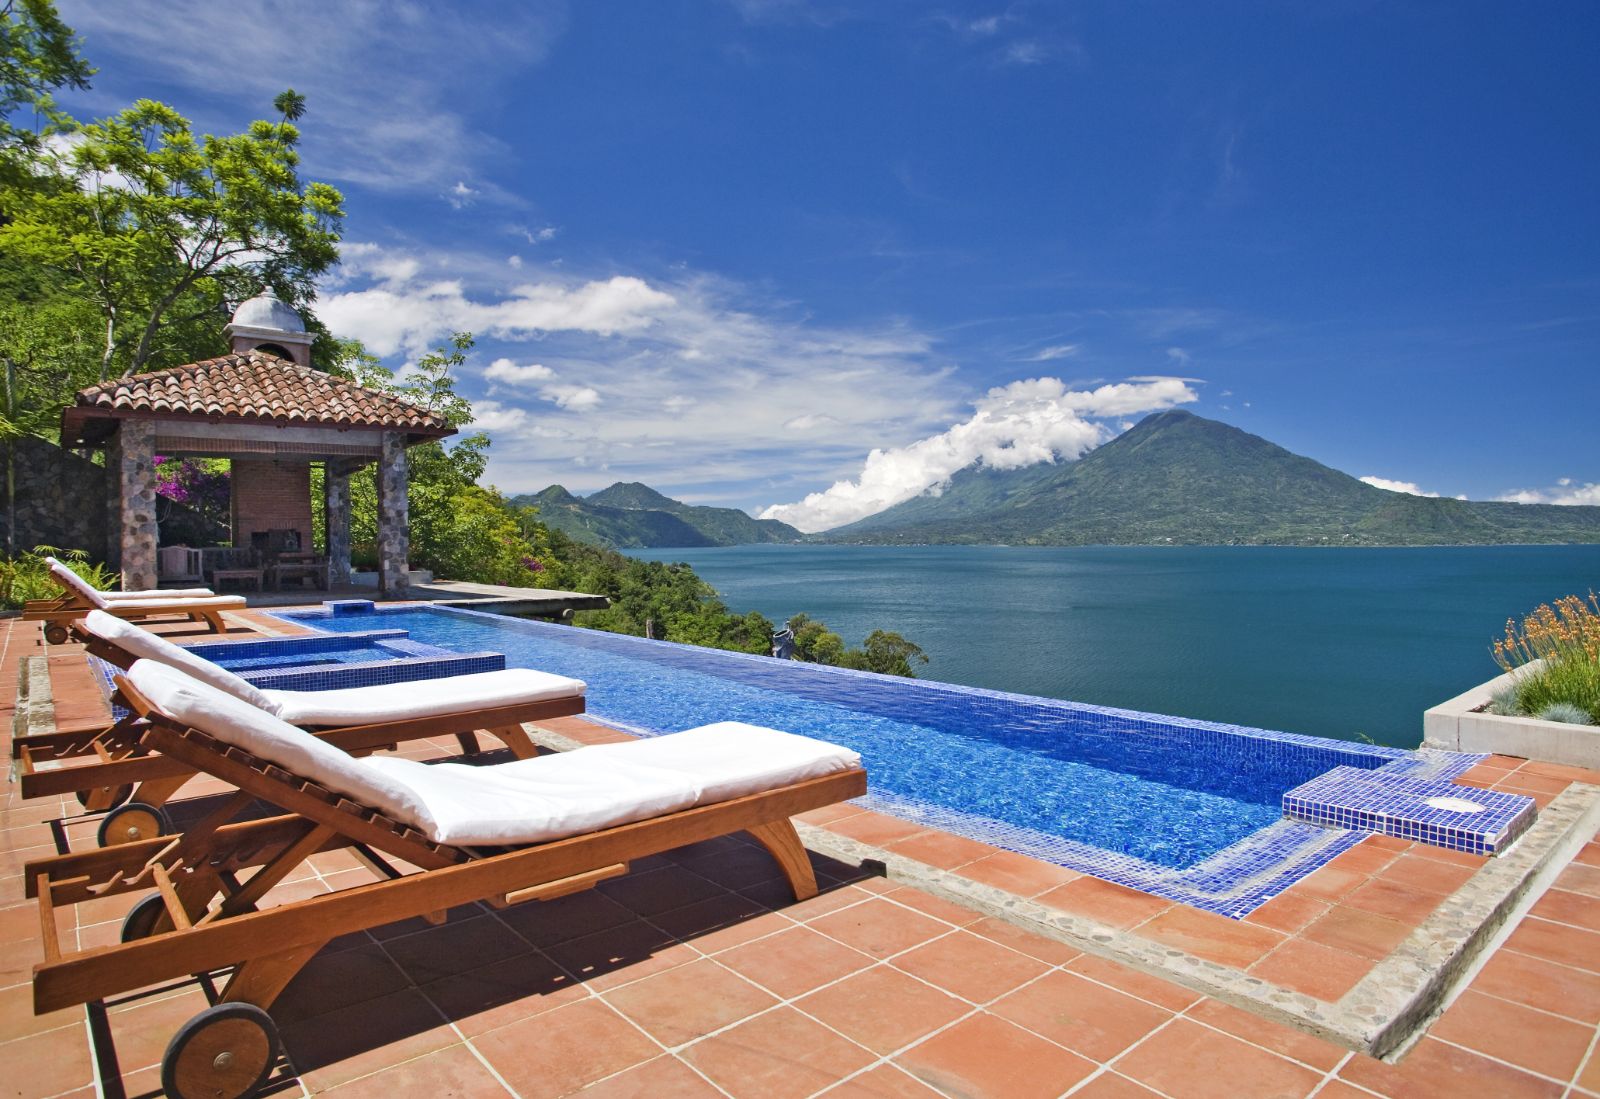 Pool terrace at Casa Palopo in Guatemala